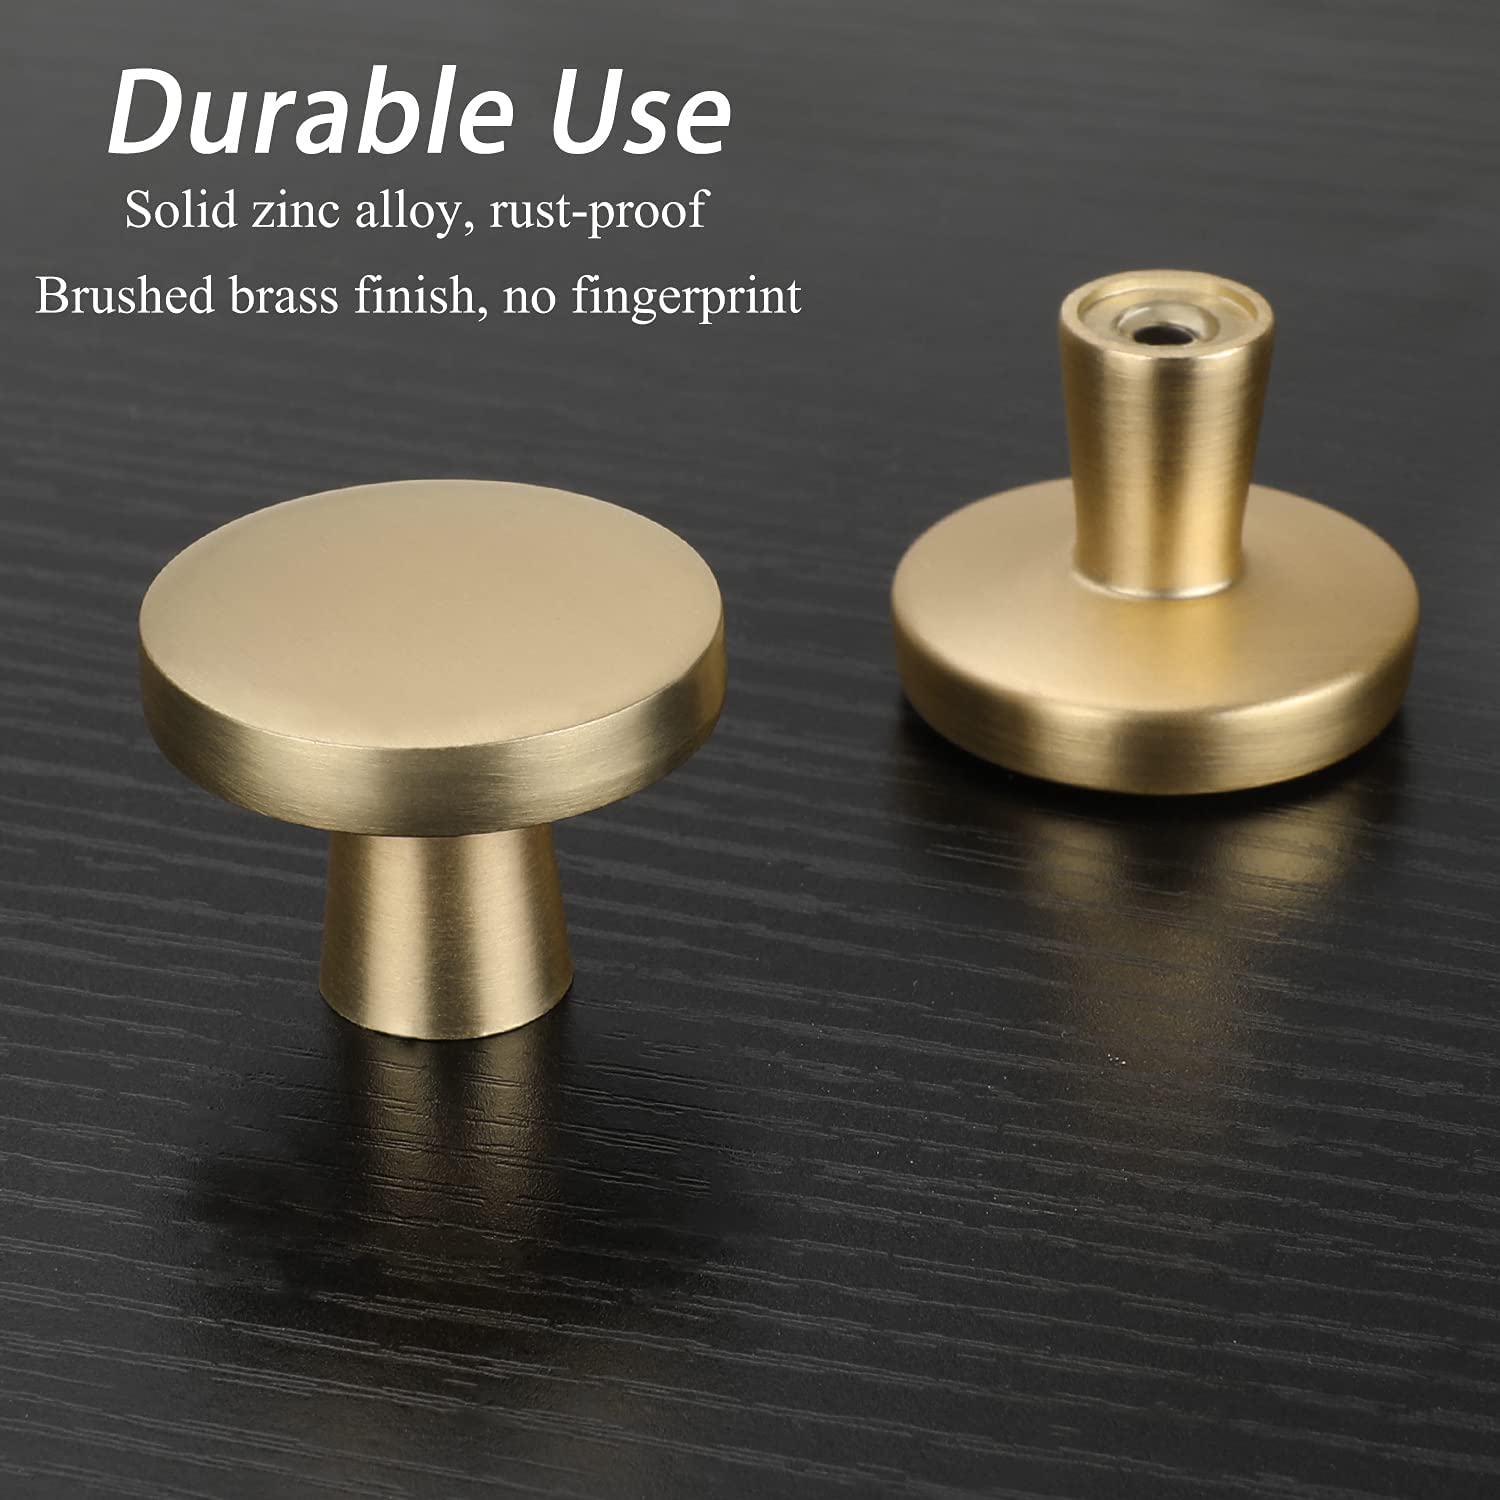 6 Pack Brushed Gold Cabinet Knobs 1.27 Inch Diameter (LS5310GD) -Homdiy